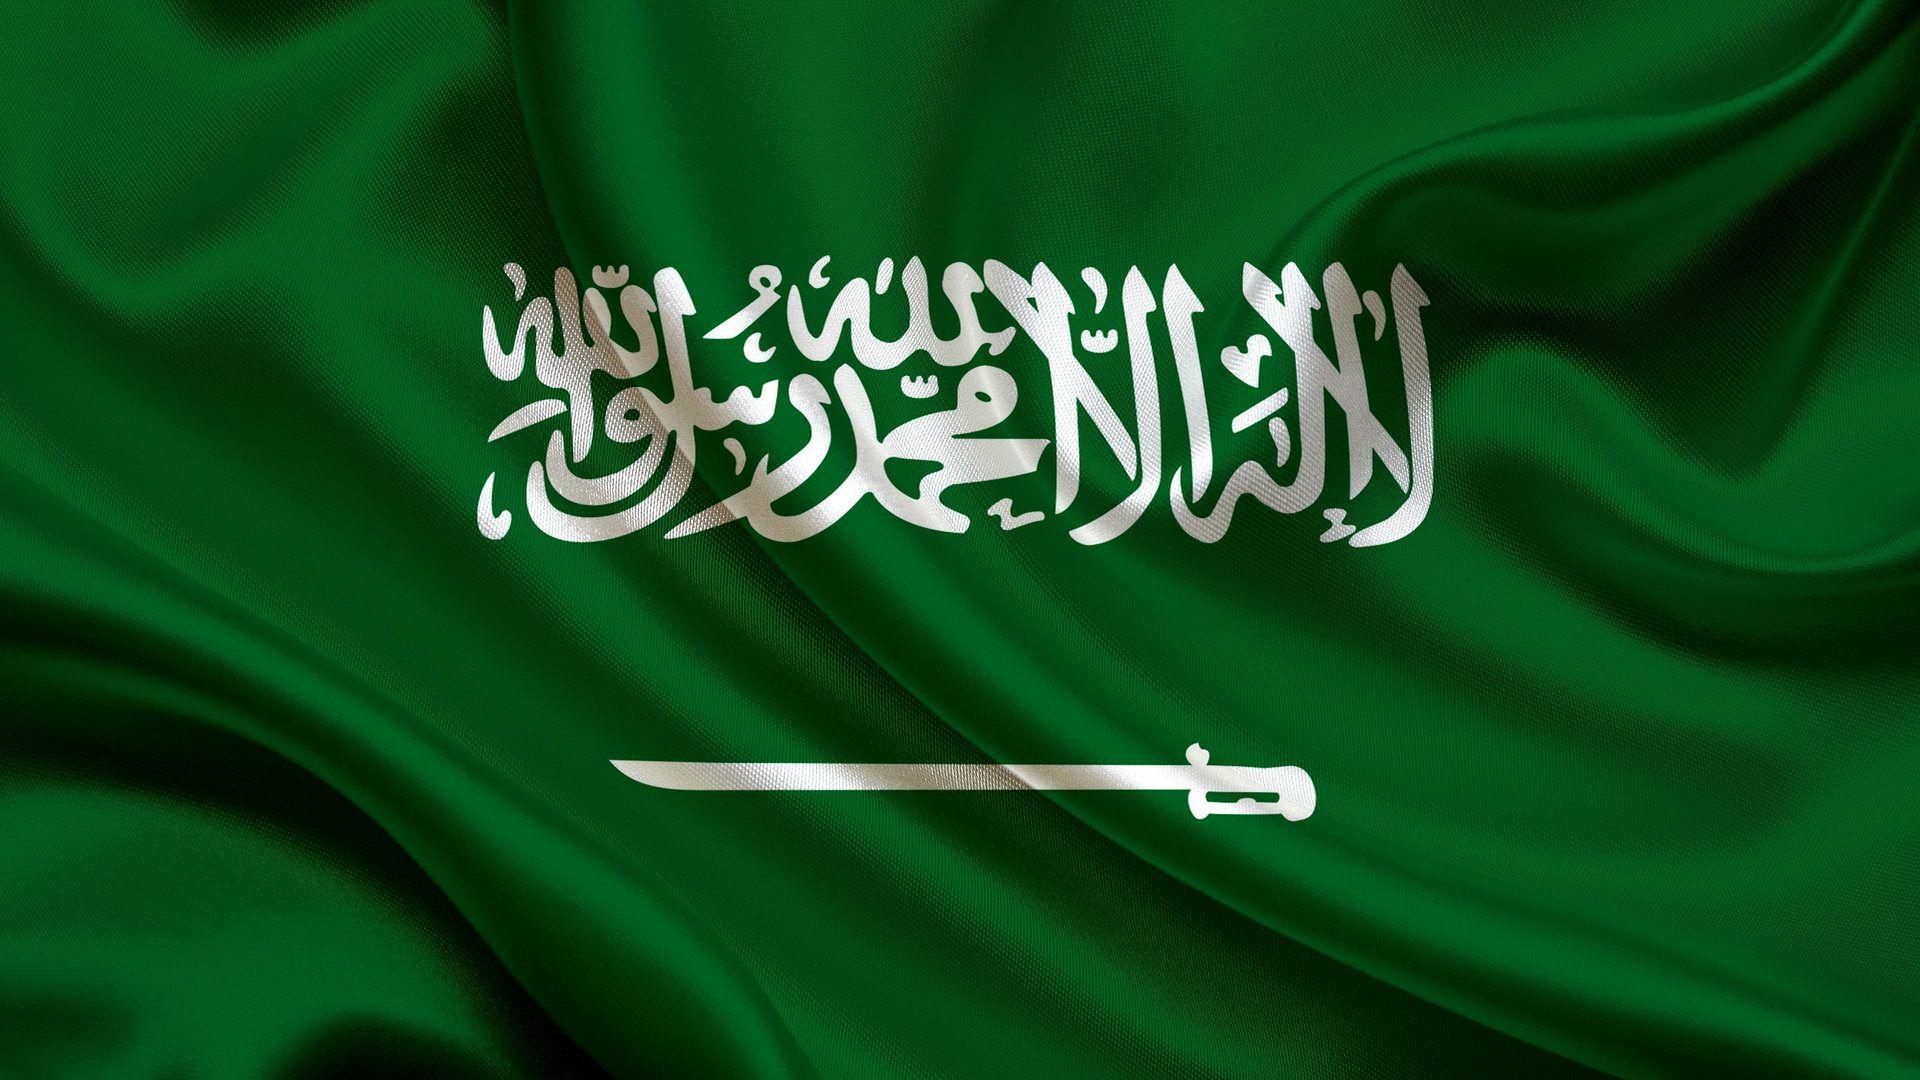 20 Free Riyadh  Saudi Arabia Images  Pixabay